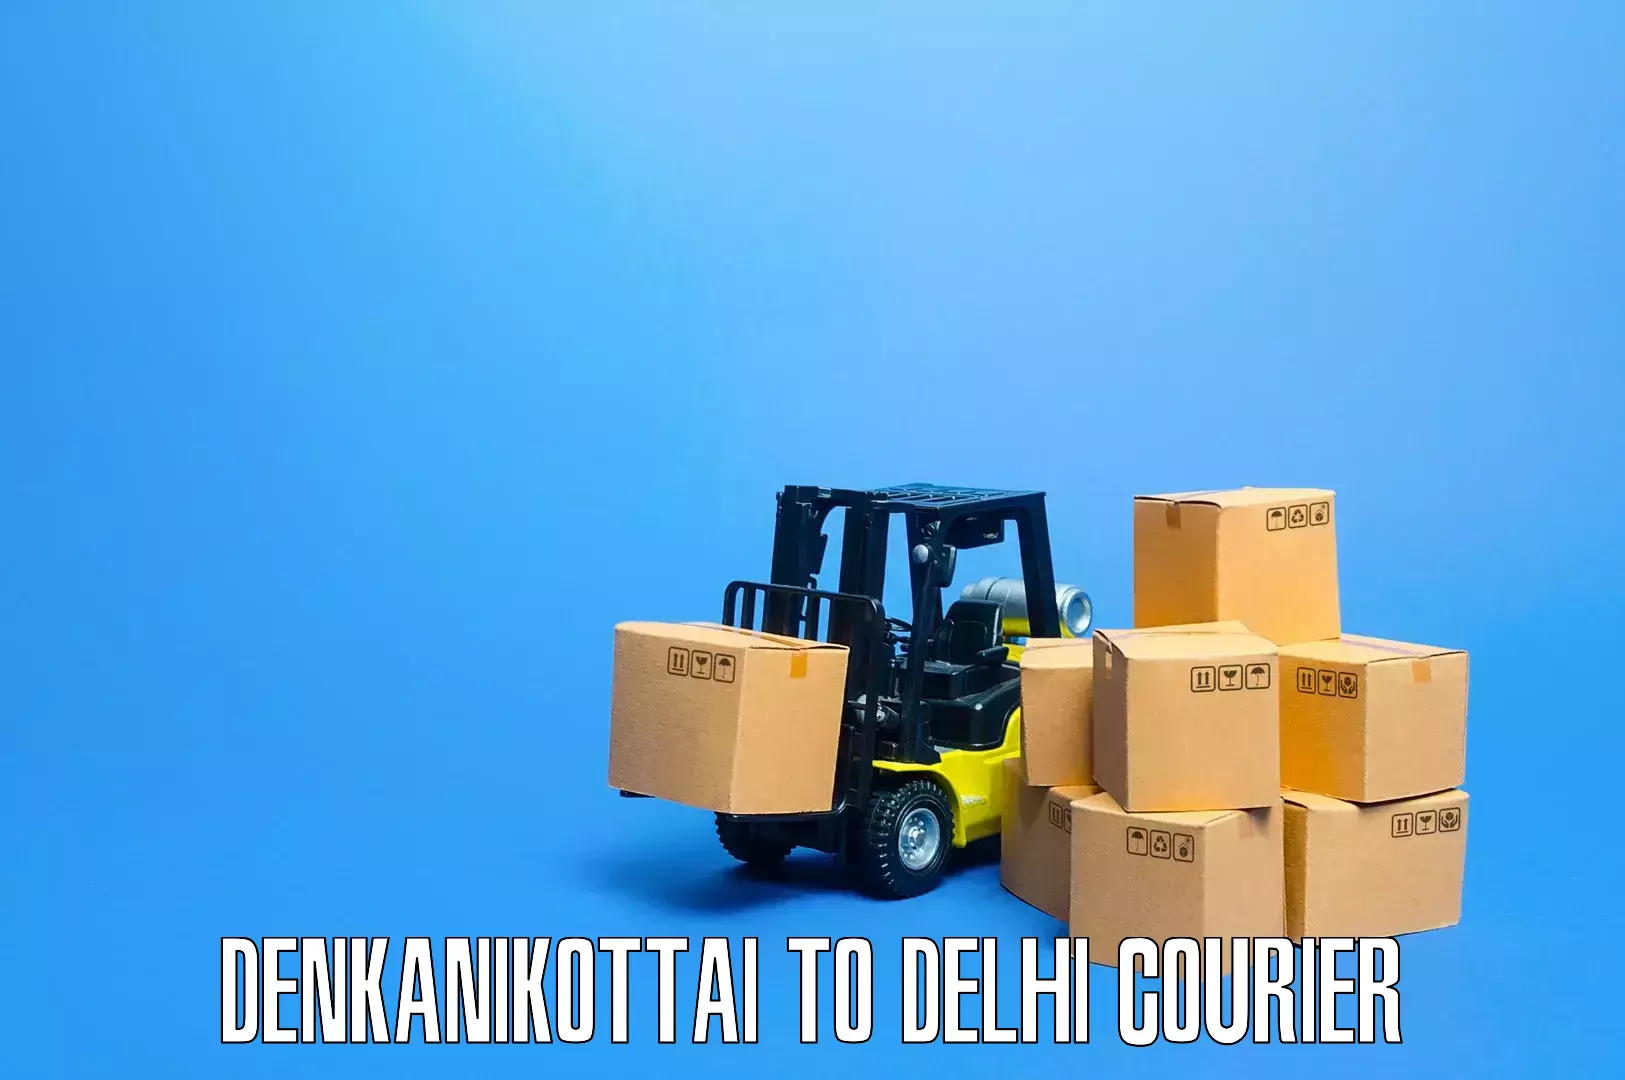 Custom moving and storage in Denkanikottai to Lodhi Road